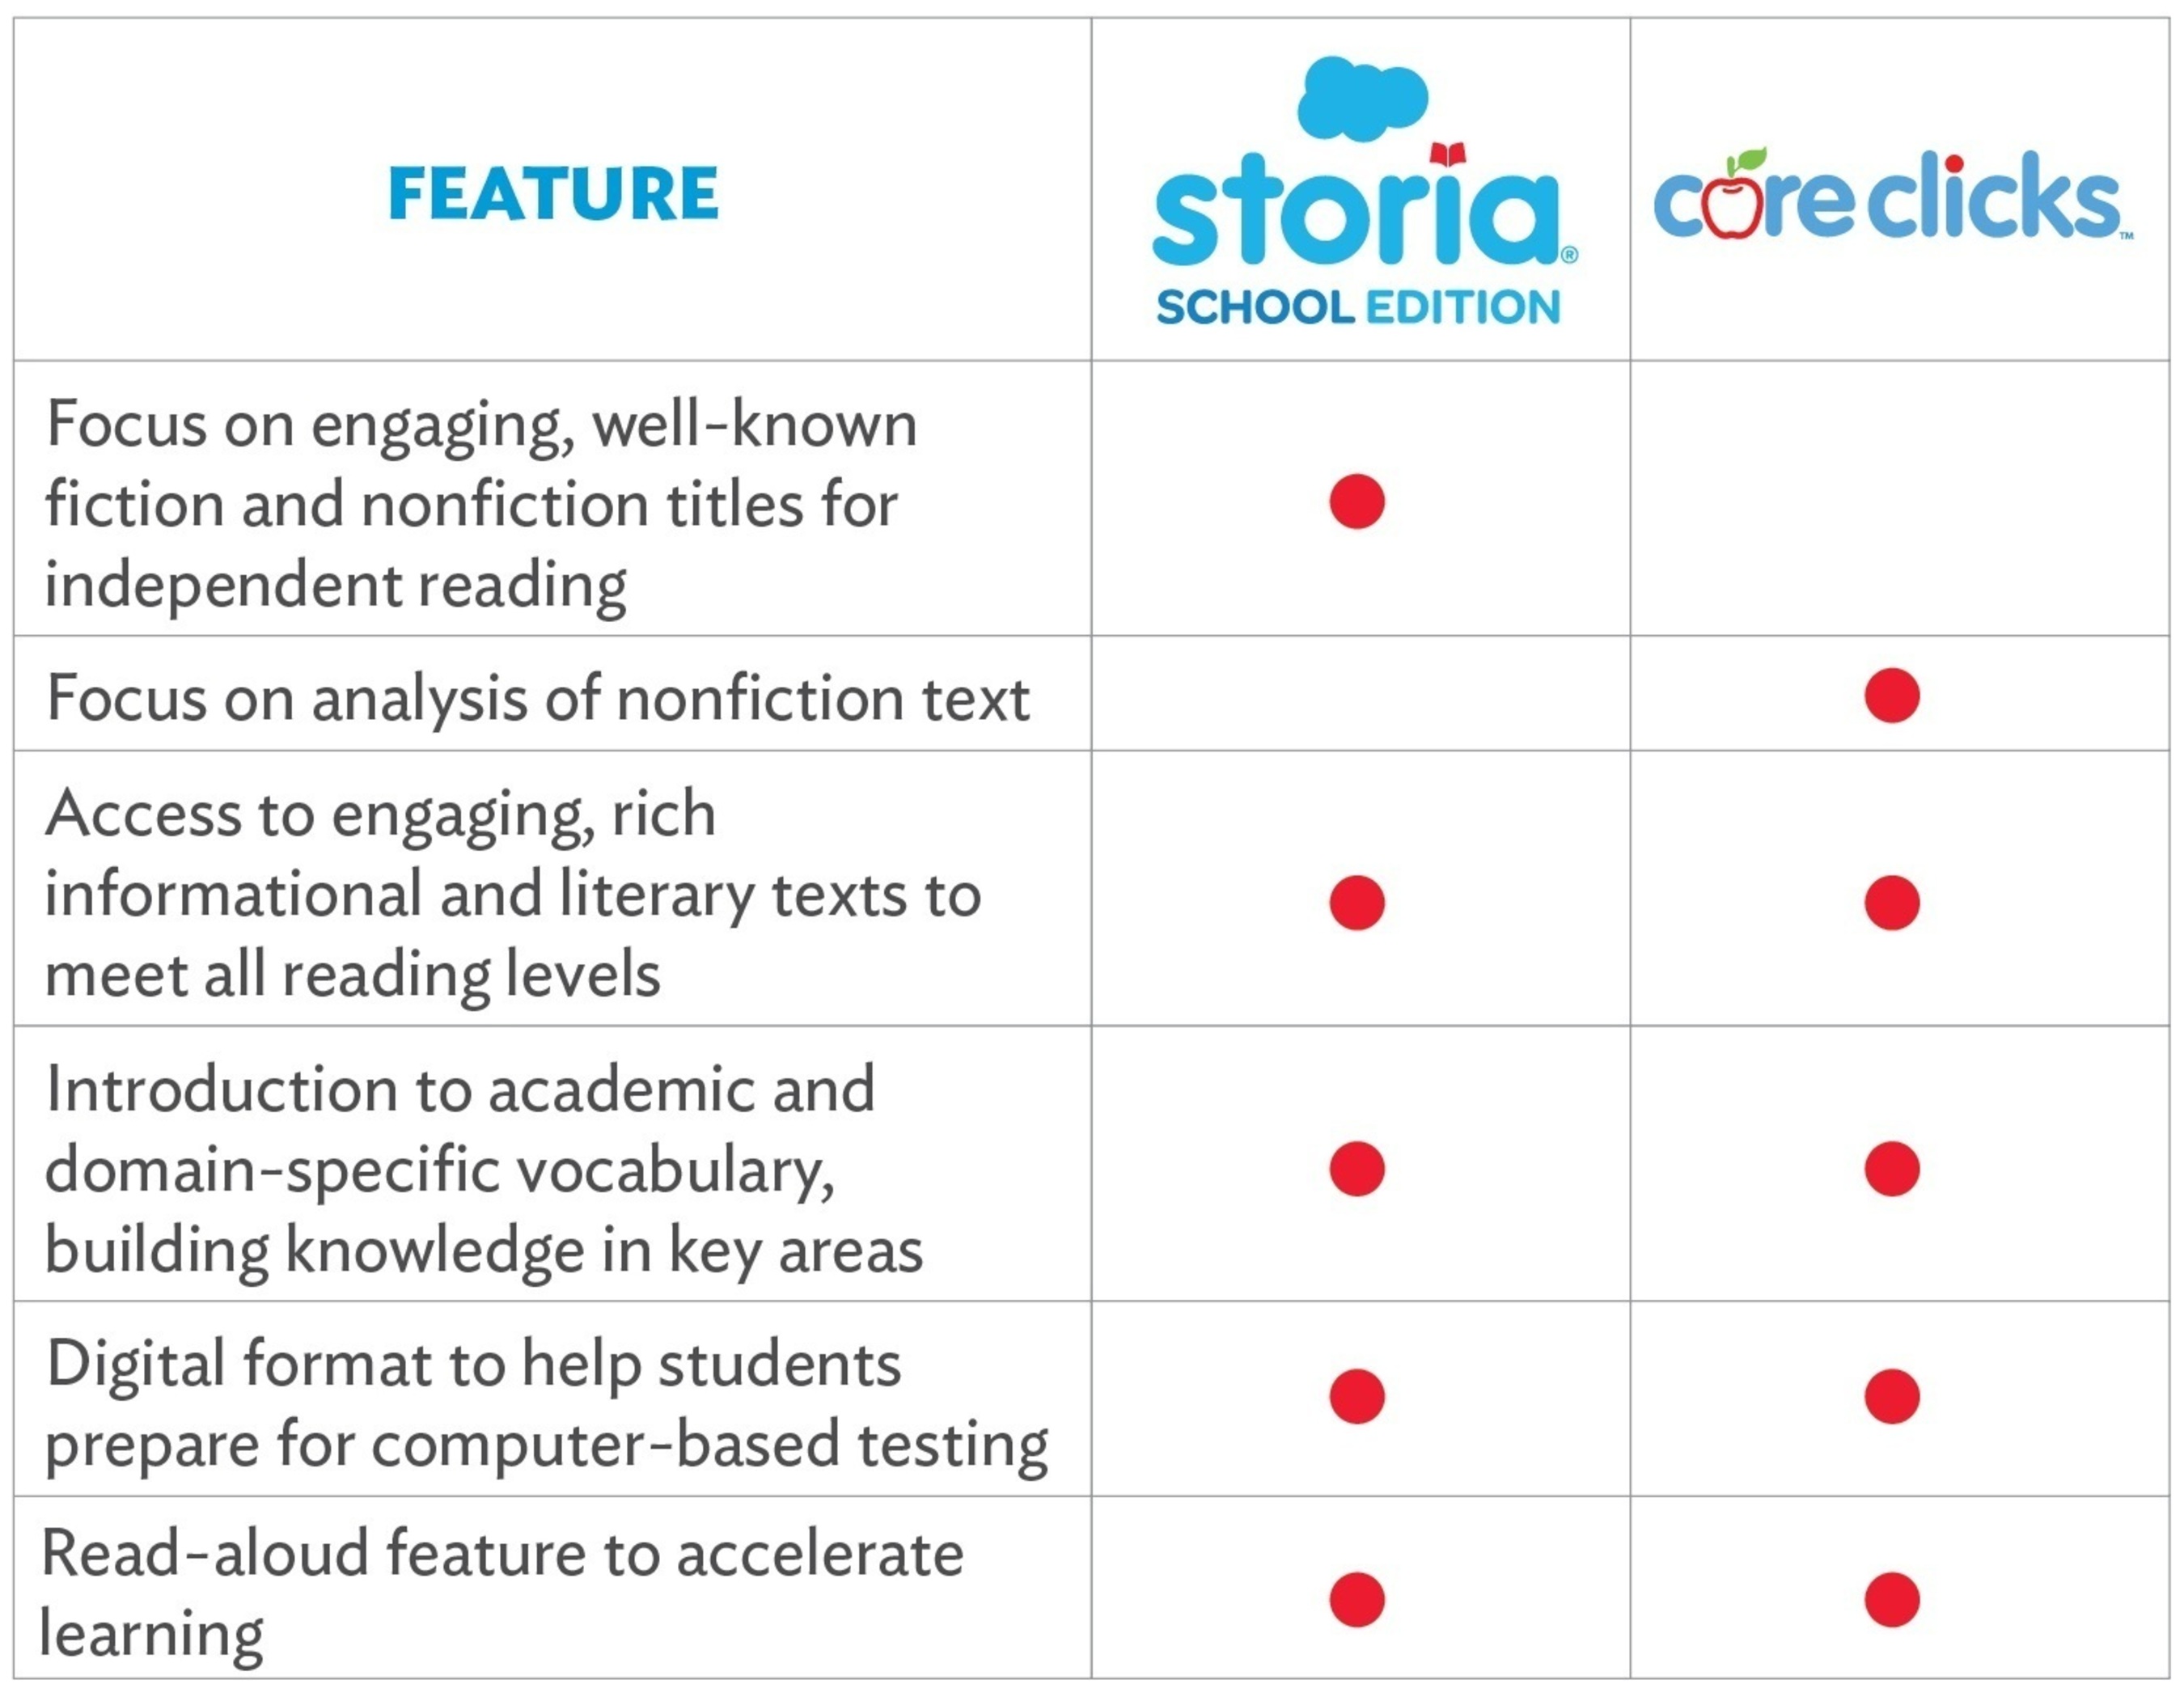 Scholastic Launches Storia School Edition and Core Clicks, New Subscription-Based Digital Reading Programs for Schools. (PRNewsFoto/Scholastic Inc.)